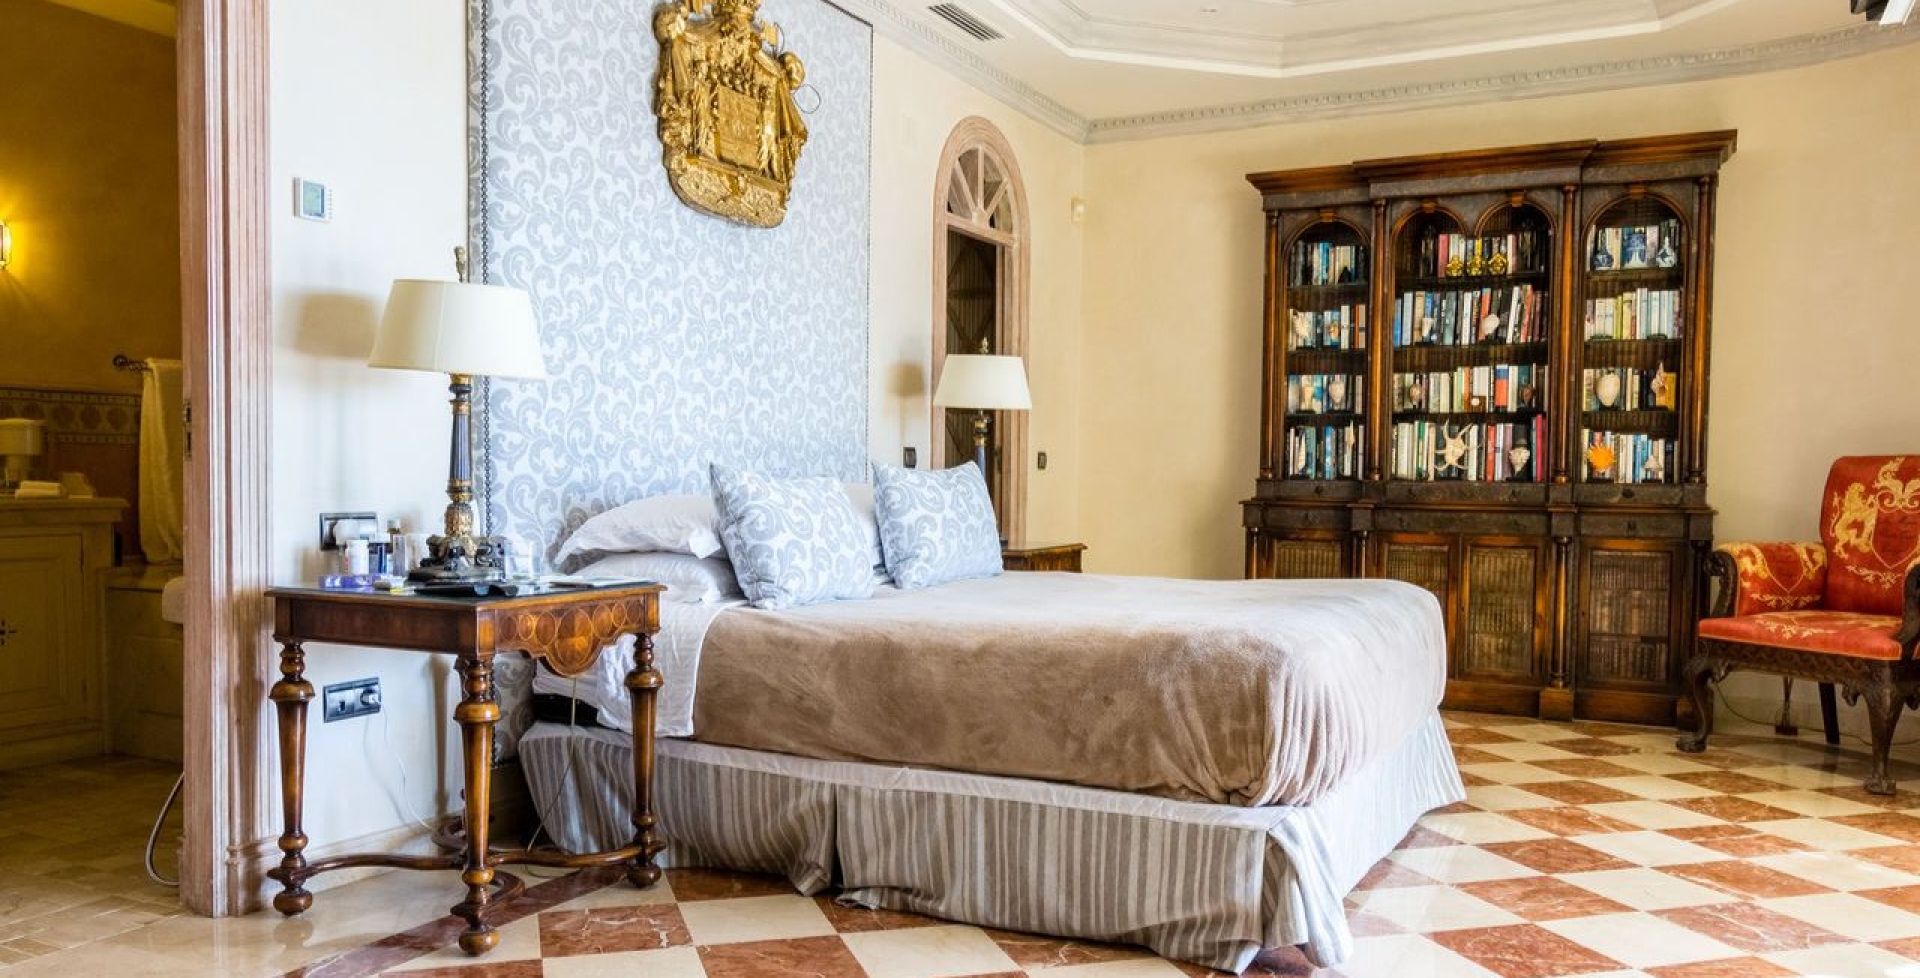 Villa Ocean 9 bedroom Marbella – bedroom5